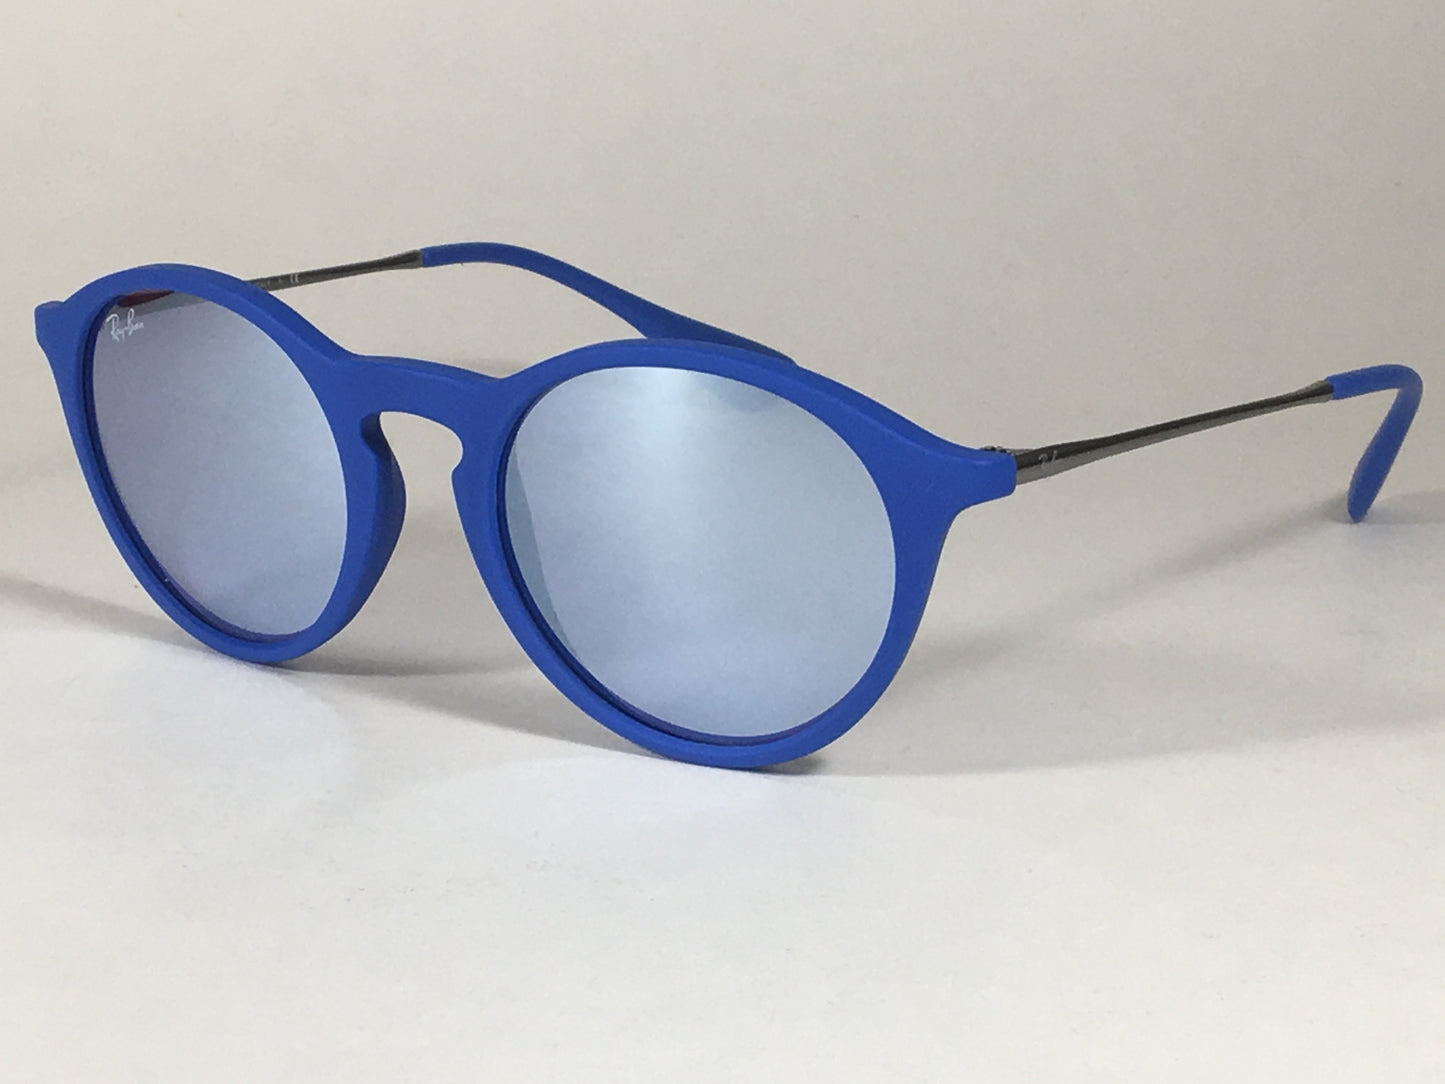 Ray-Ban Round Phantos Sunglasses Matte Blue Frame Gray Flash Lens Rb4243 6263/1U - Sunglasses